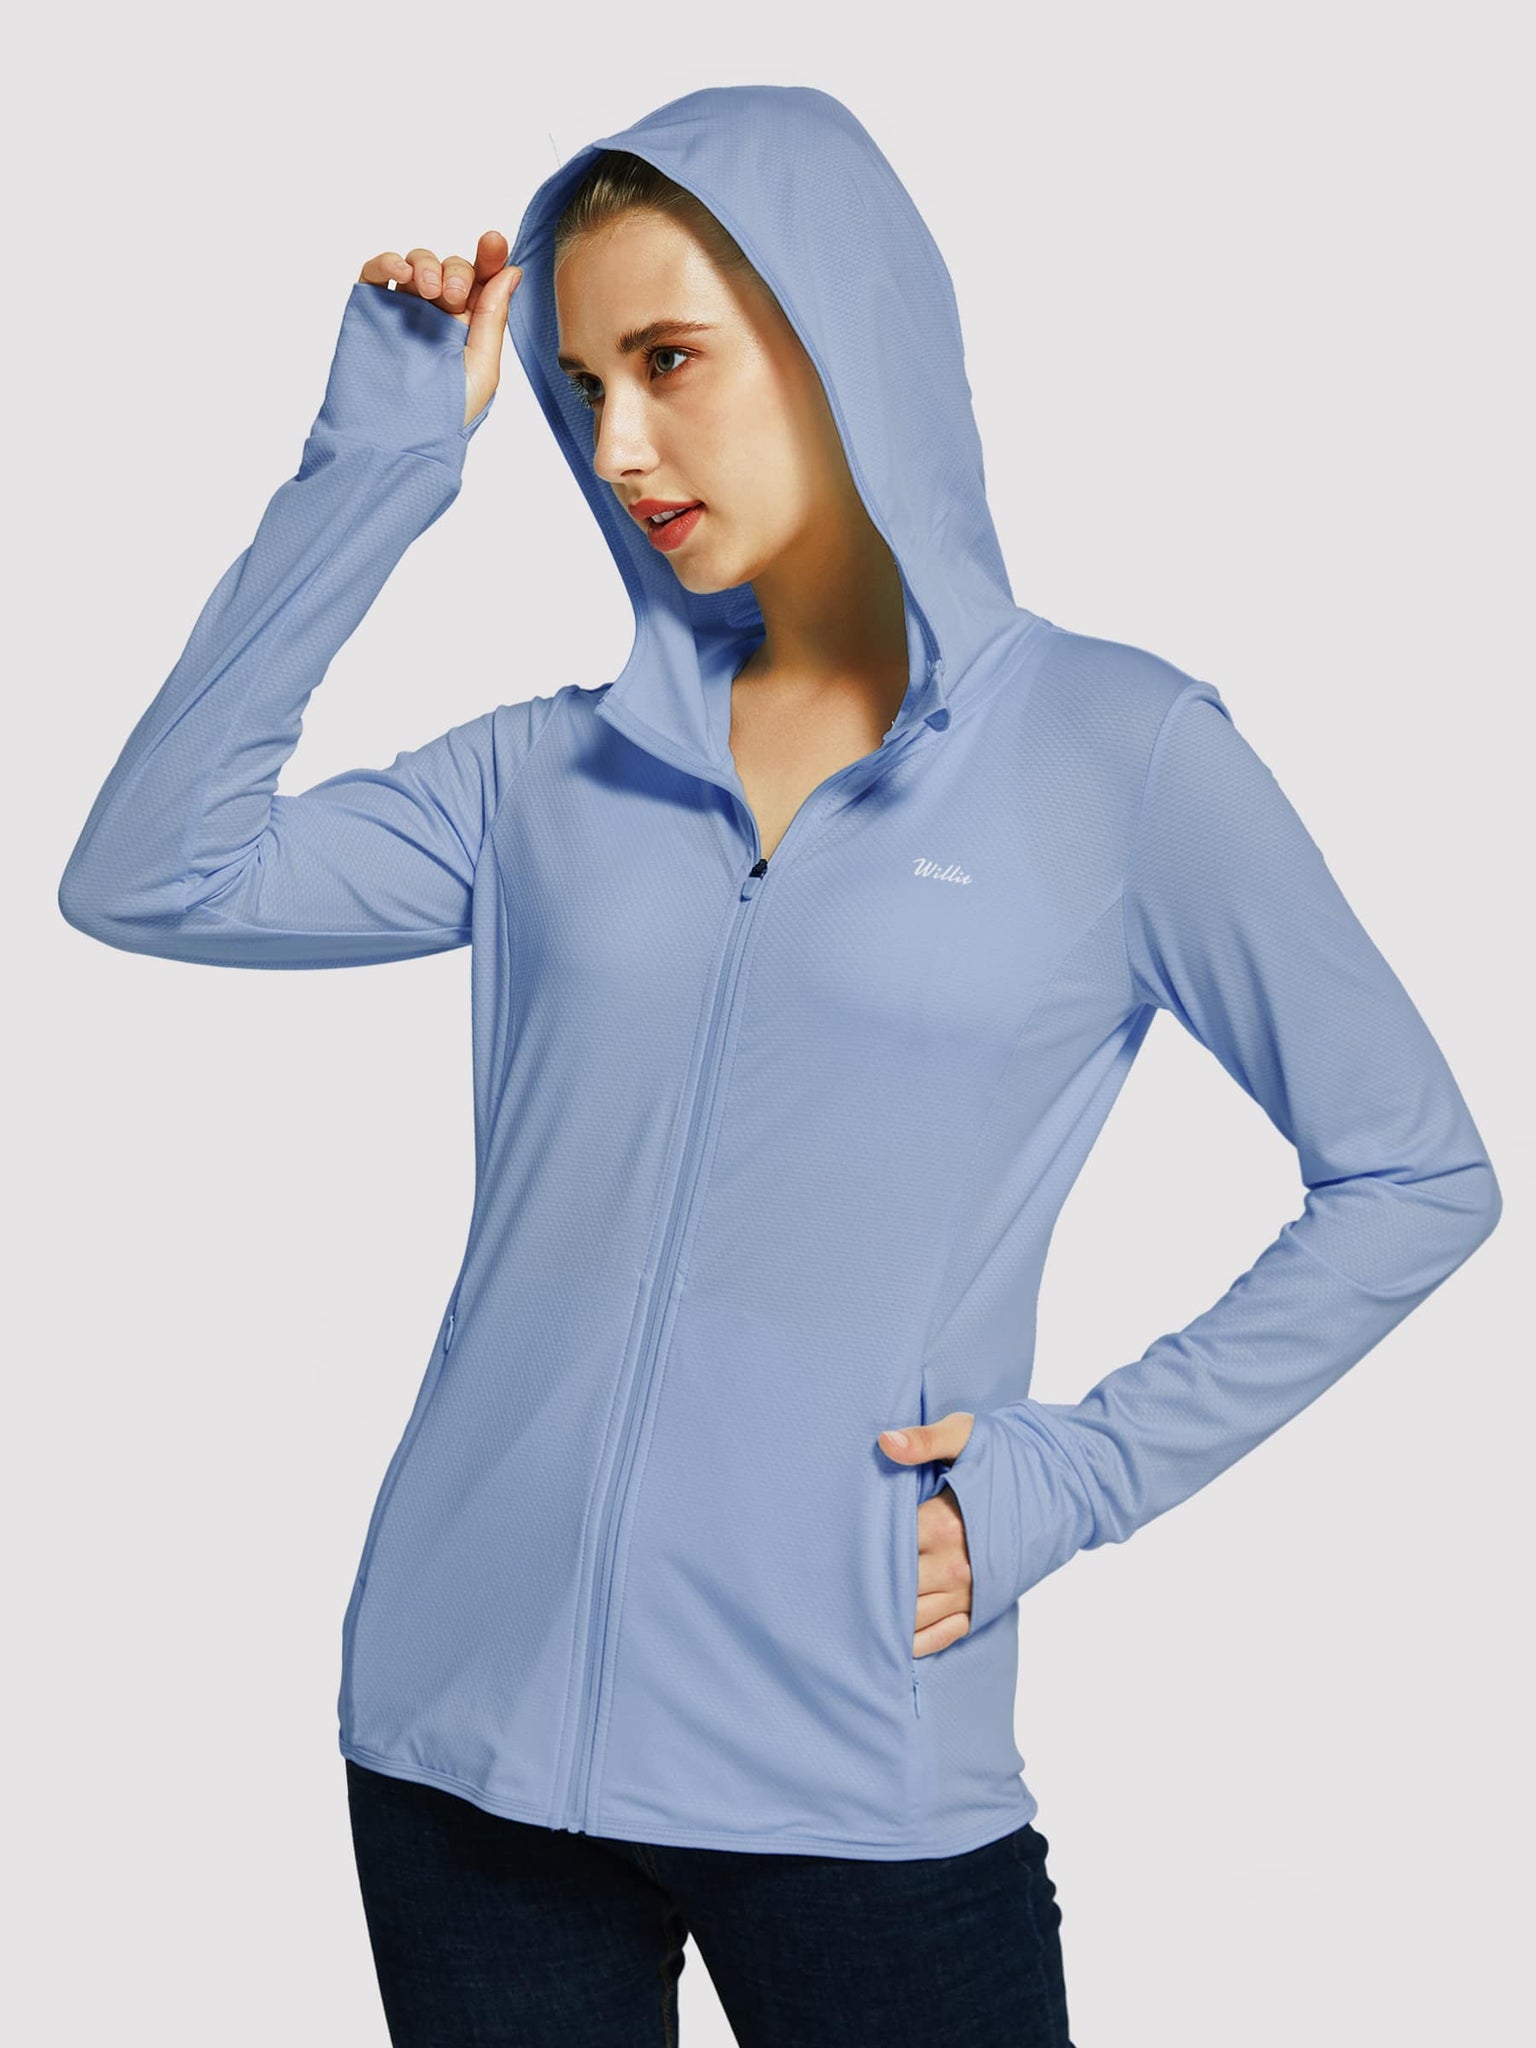 Willit Women's UPF 50+ Sun Protection Hoodie SPF Shirt Long Sleeve Hiking Fishing Outdoor Shirt Lightweight Hoodie Blue M, Size: Medium